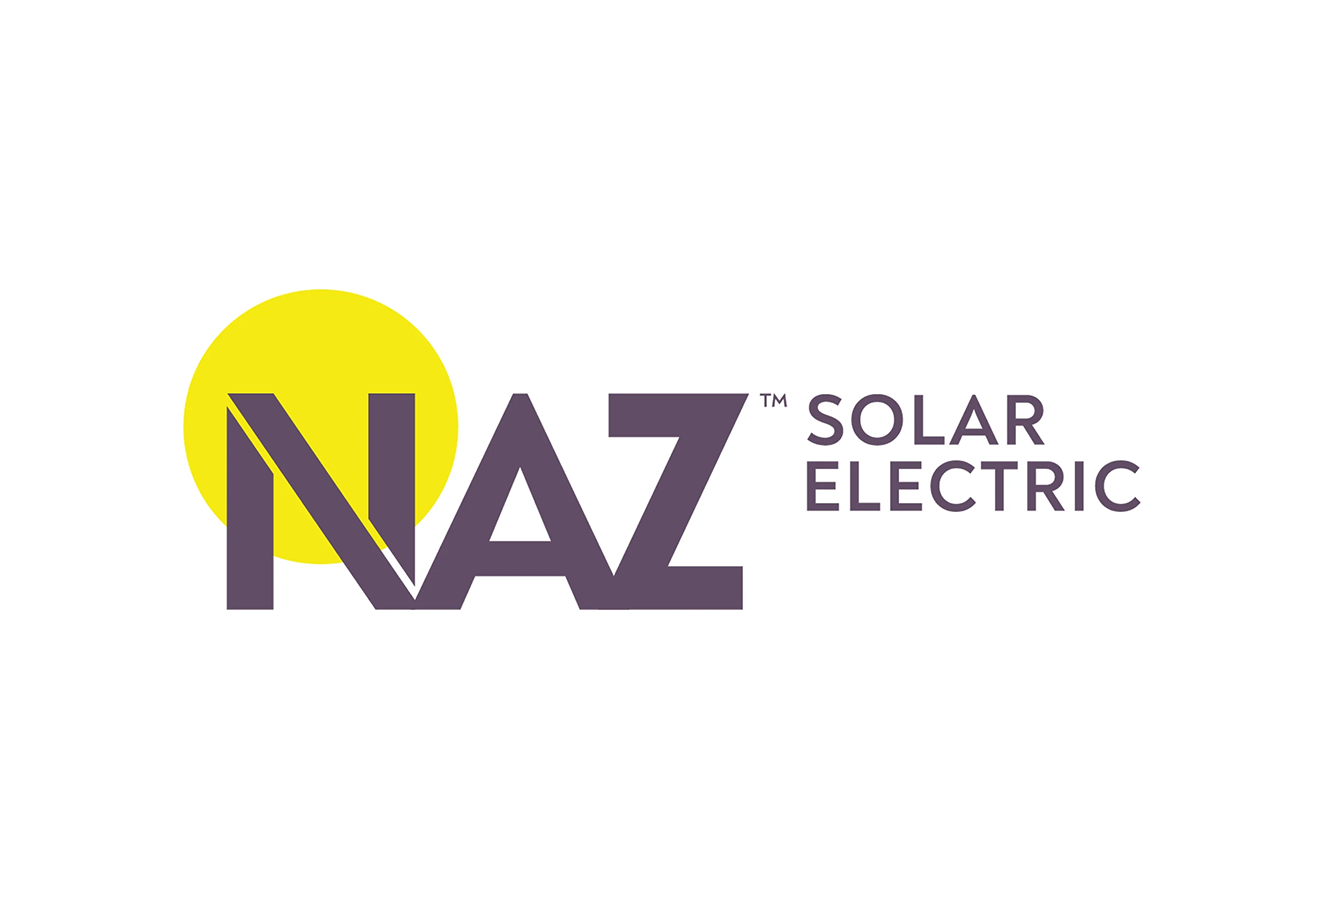 NAZ Solar Electric